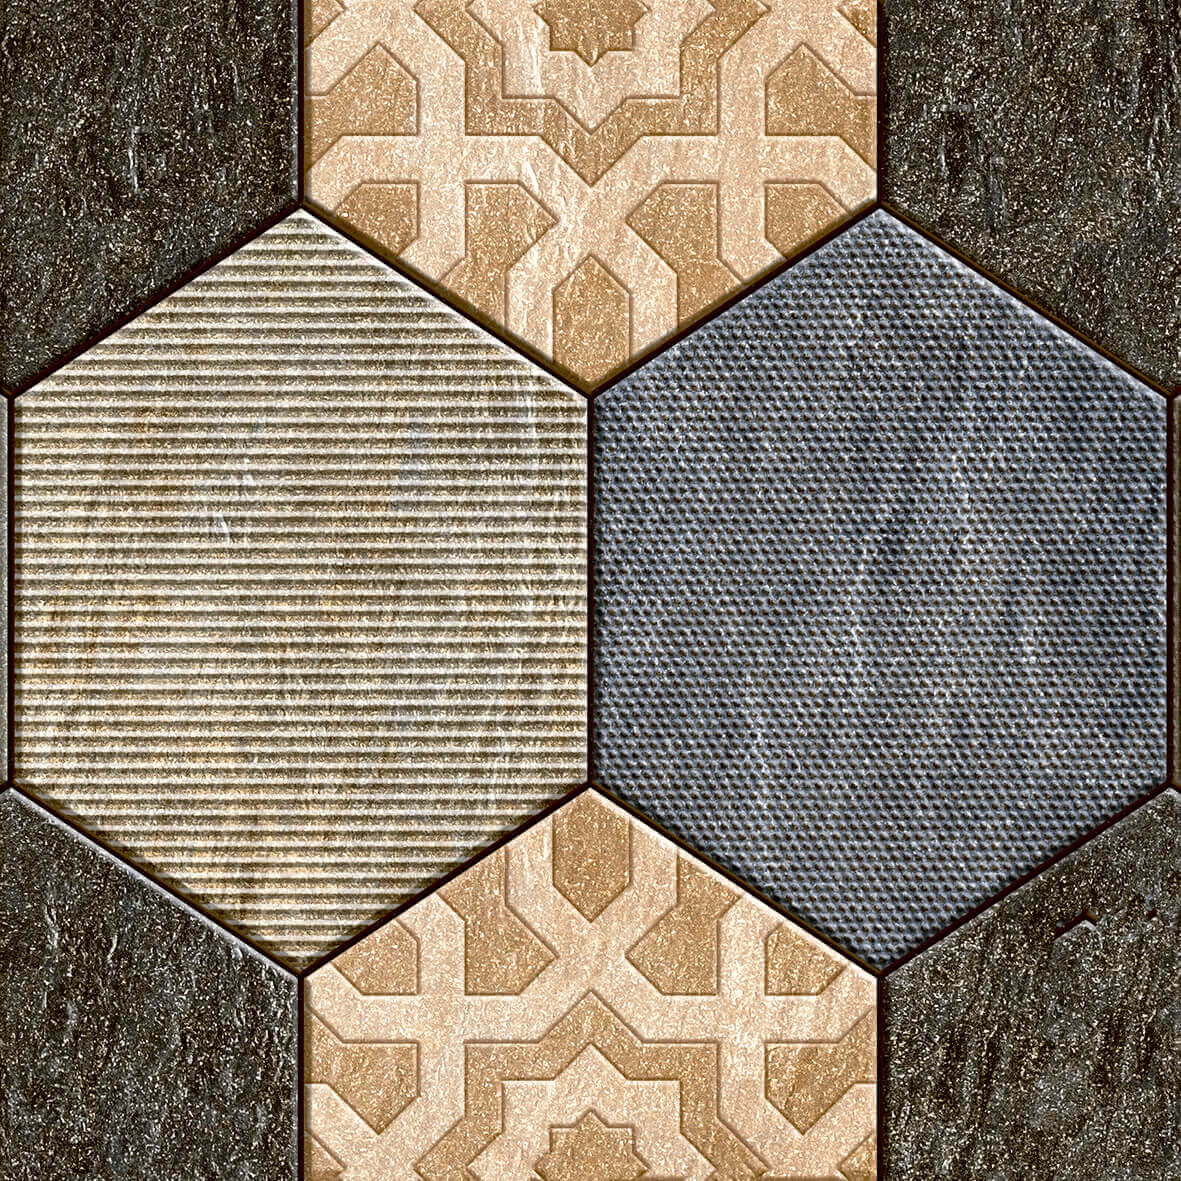 Hexagonal Tiles for Balcony Tiles, Swimming Pool Tiles, Parking Tiles, Pathway Tiles, Hospital Tiles, Automotive Tiles, High Traffic Tiles, Bar/Restaurant, Commercial/Office, Outdoor Area, Outdoor/Terrace, Porch/Parking